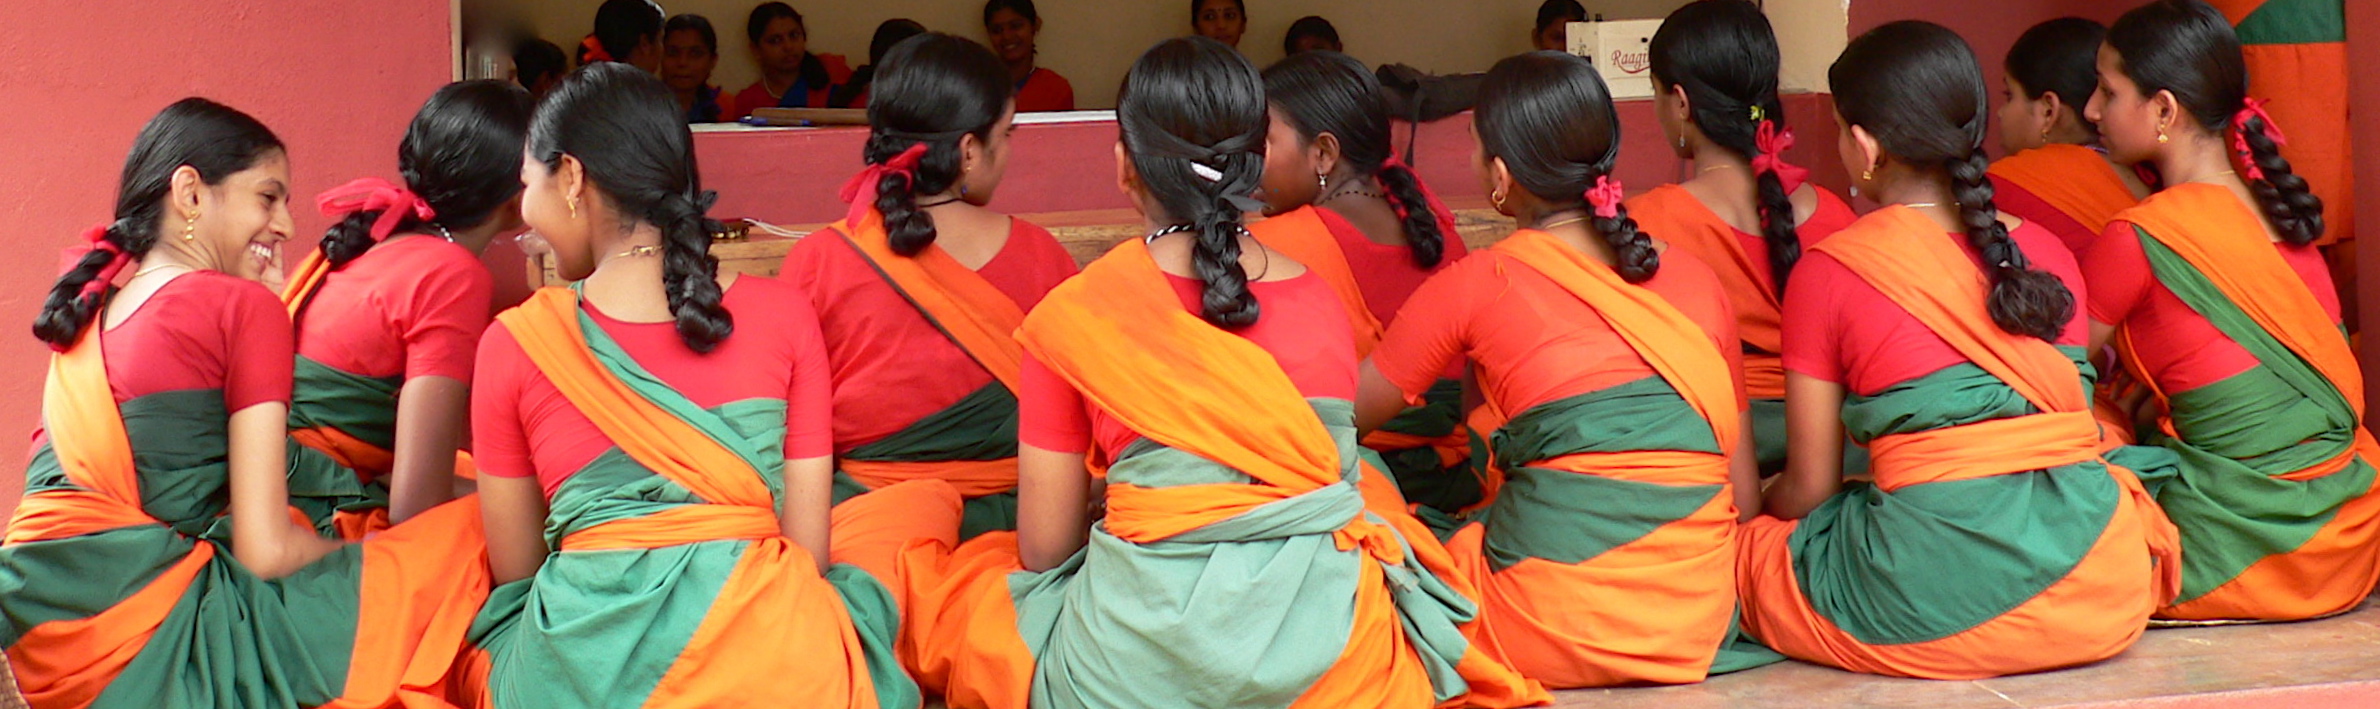 Keralesische Mädchen in bunten Saris